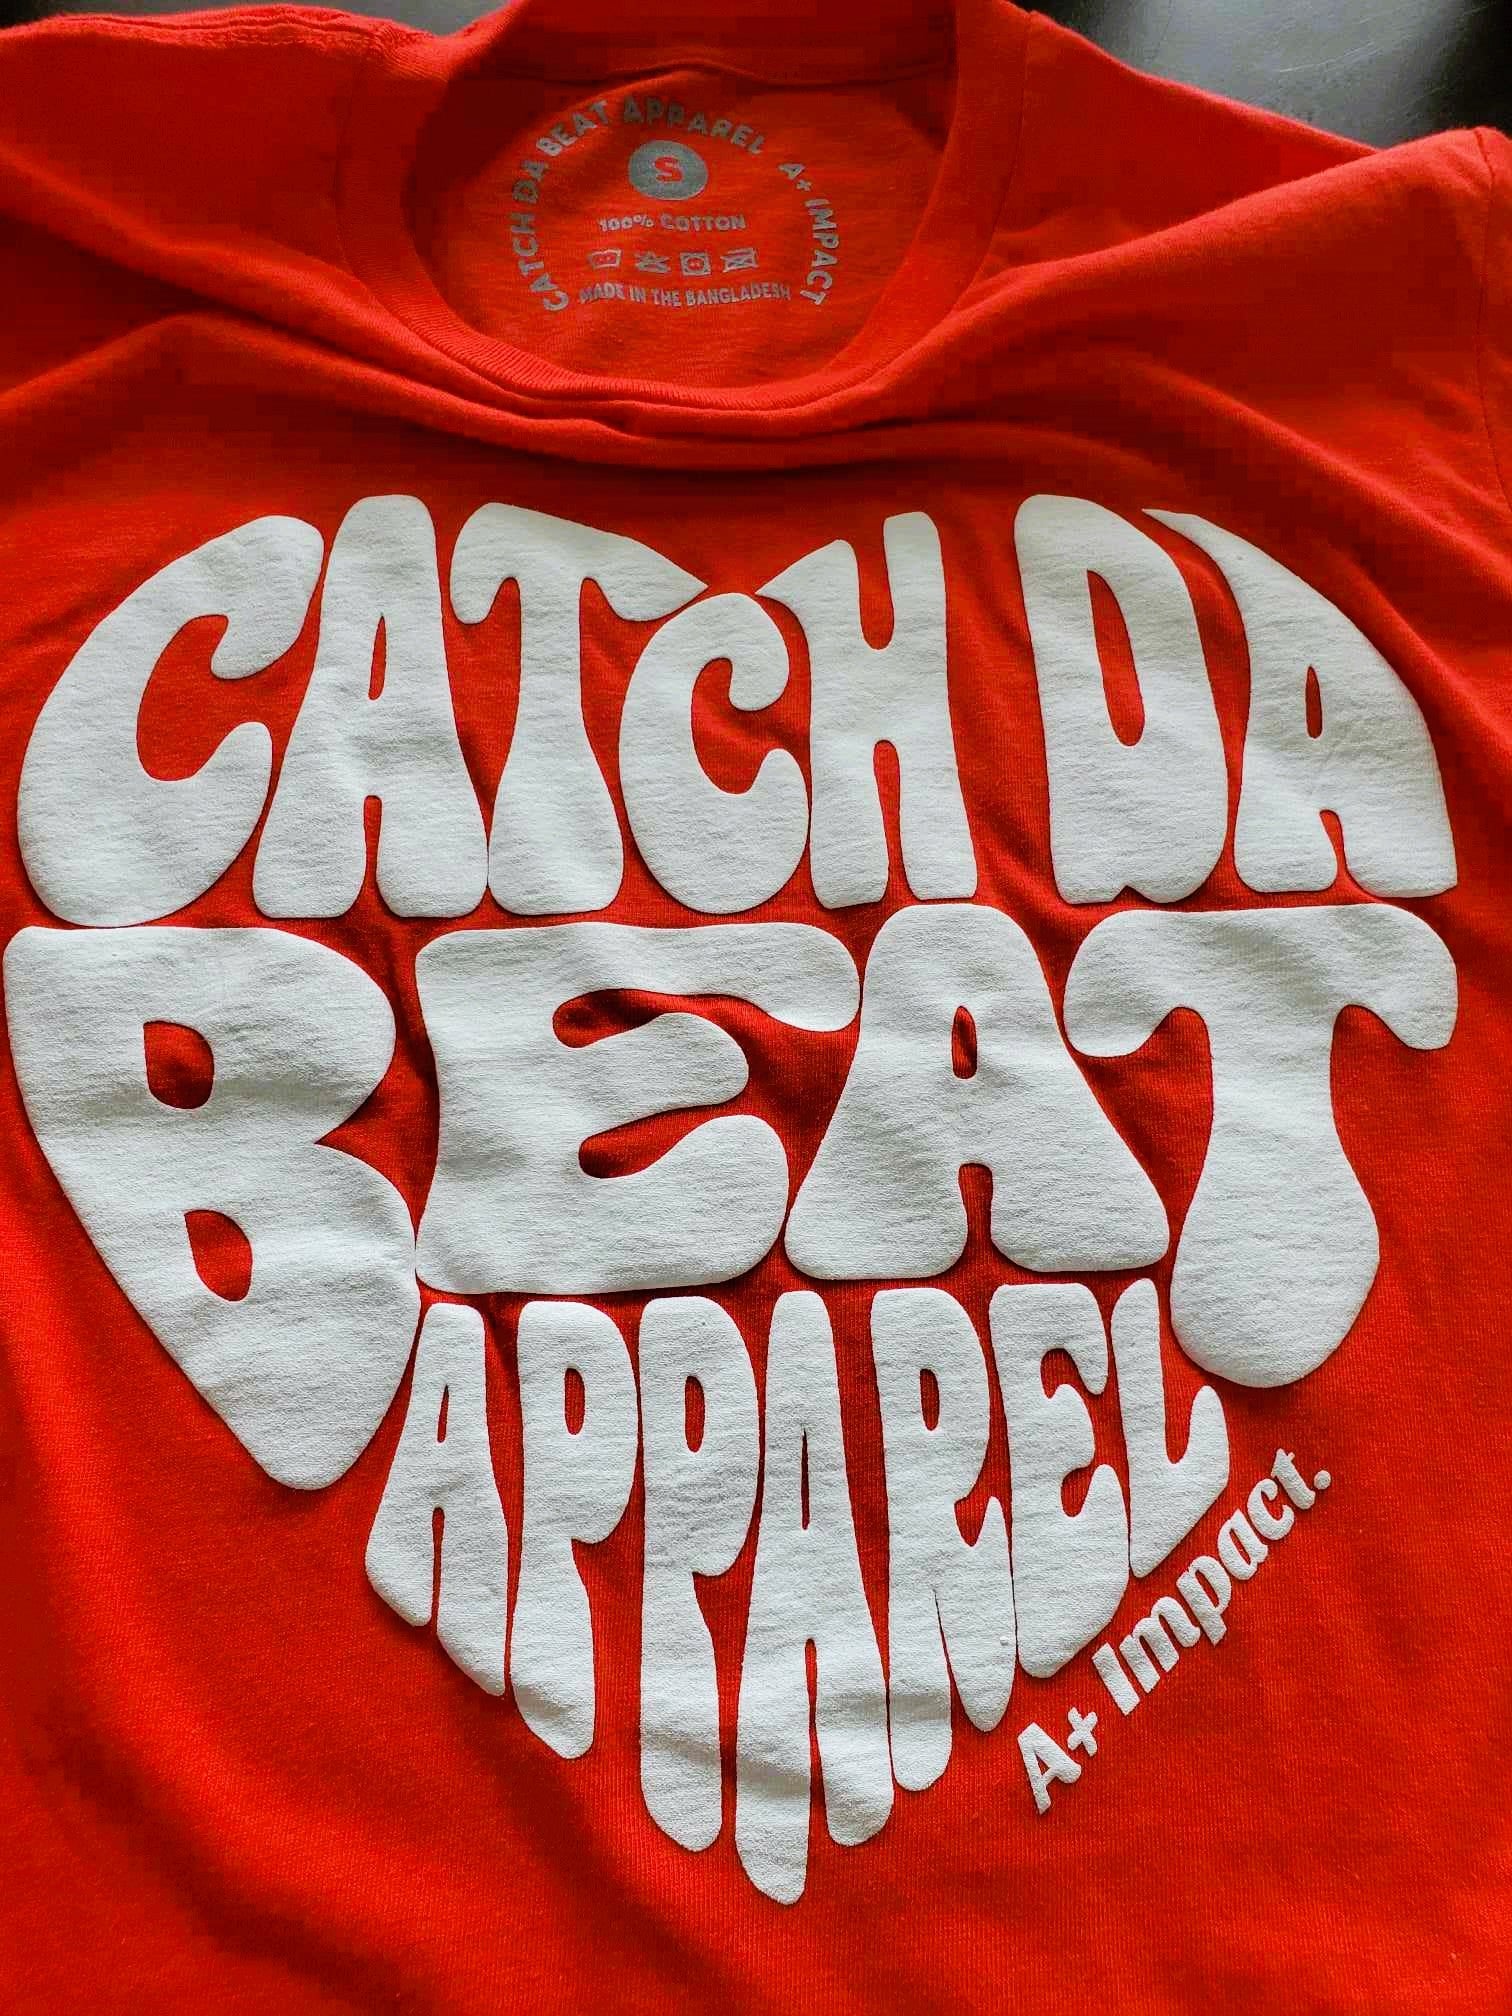 Catch Da Beat Apparel – CatchDaBeatApparelCompany